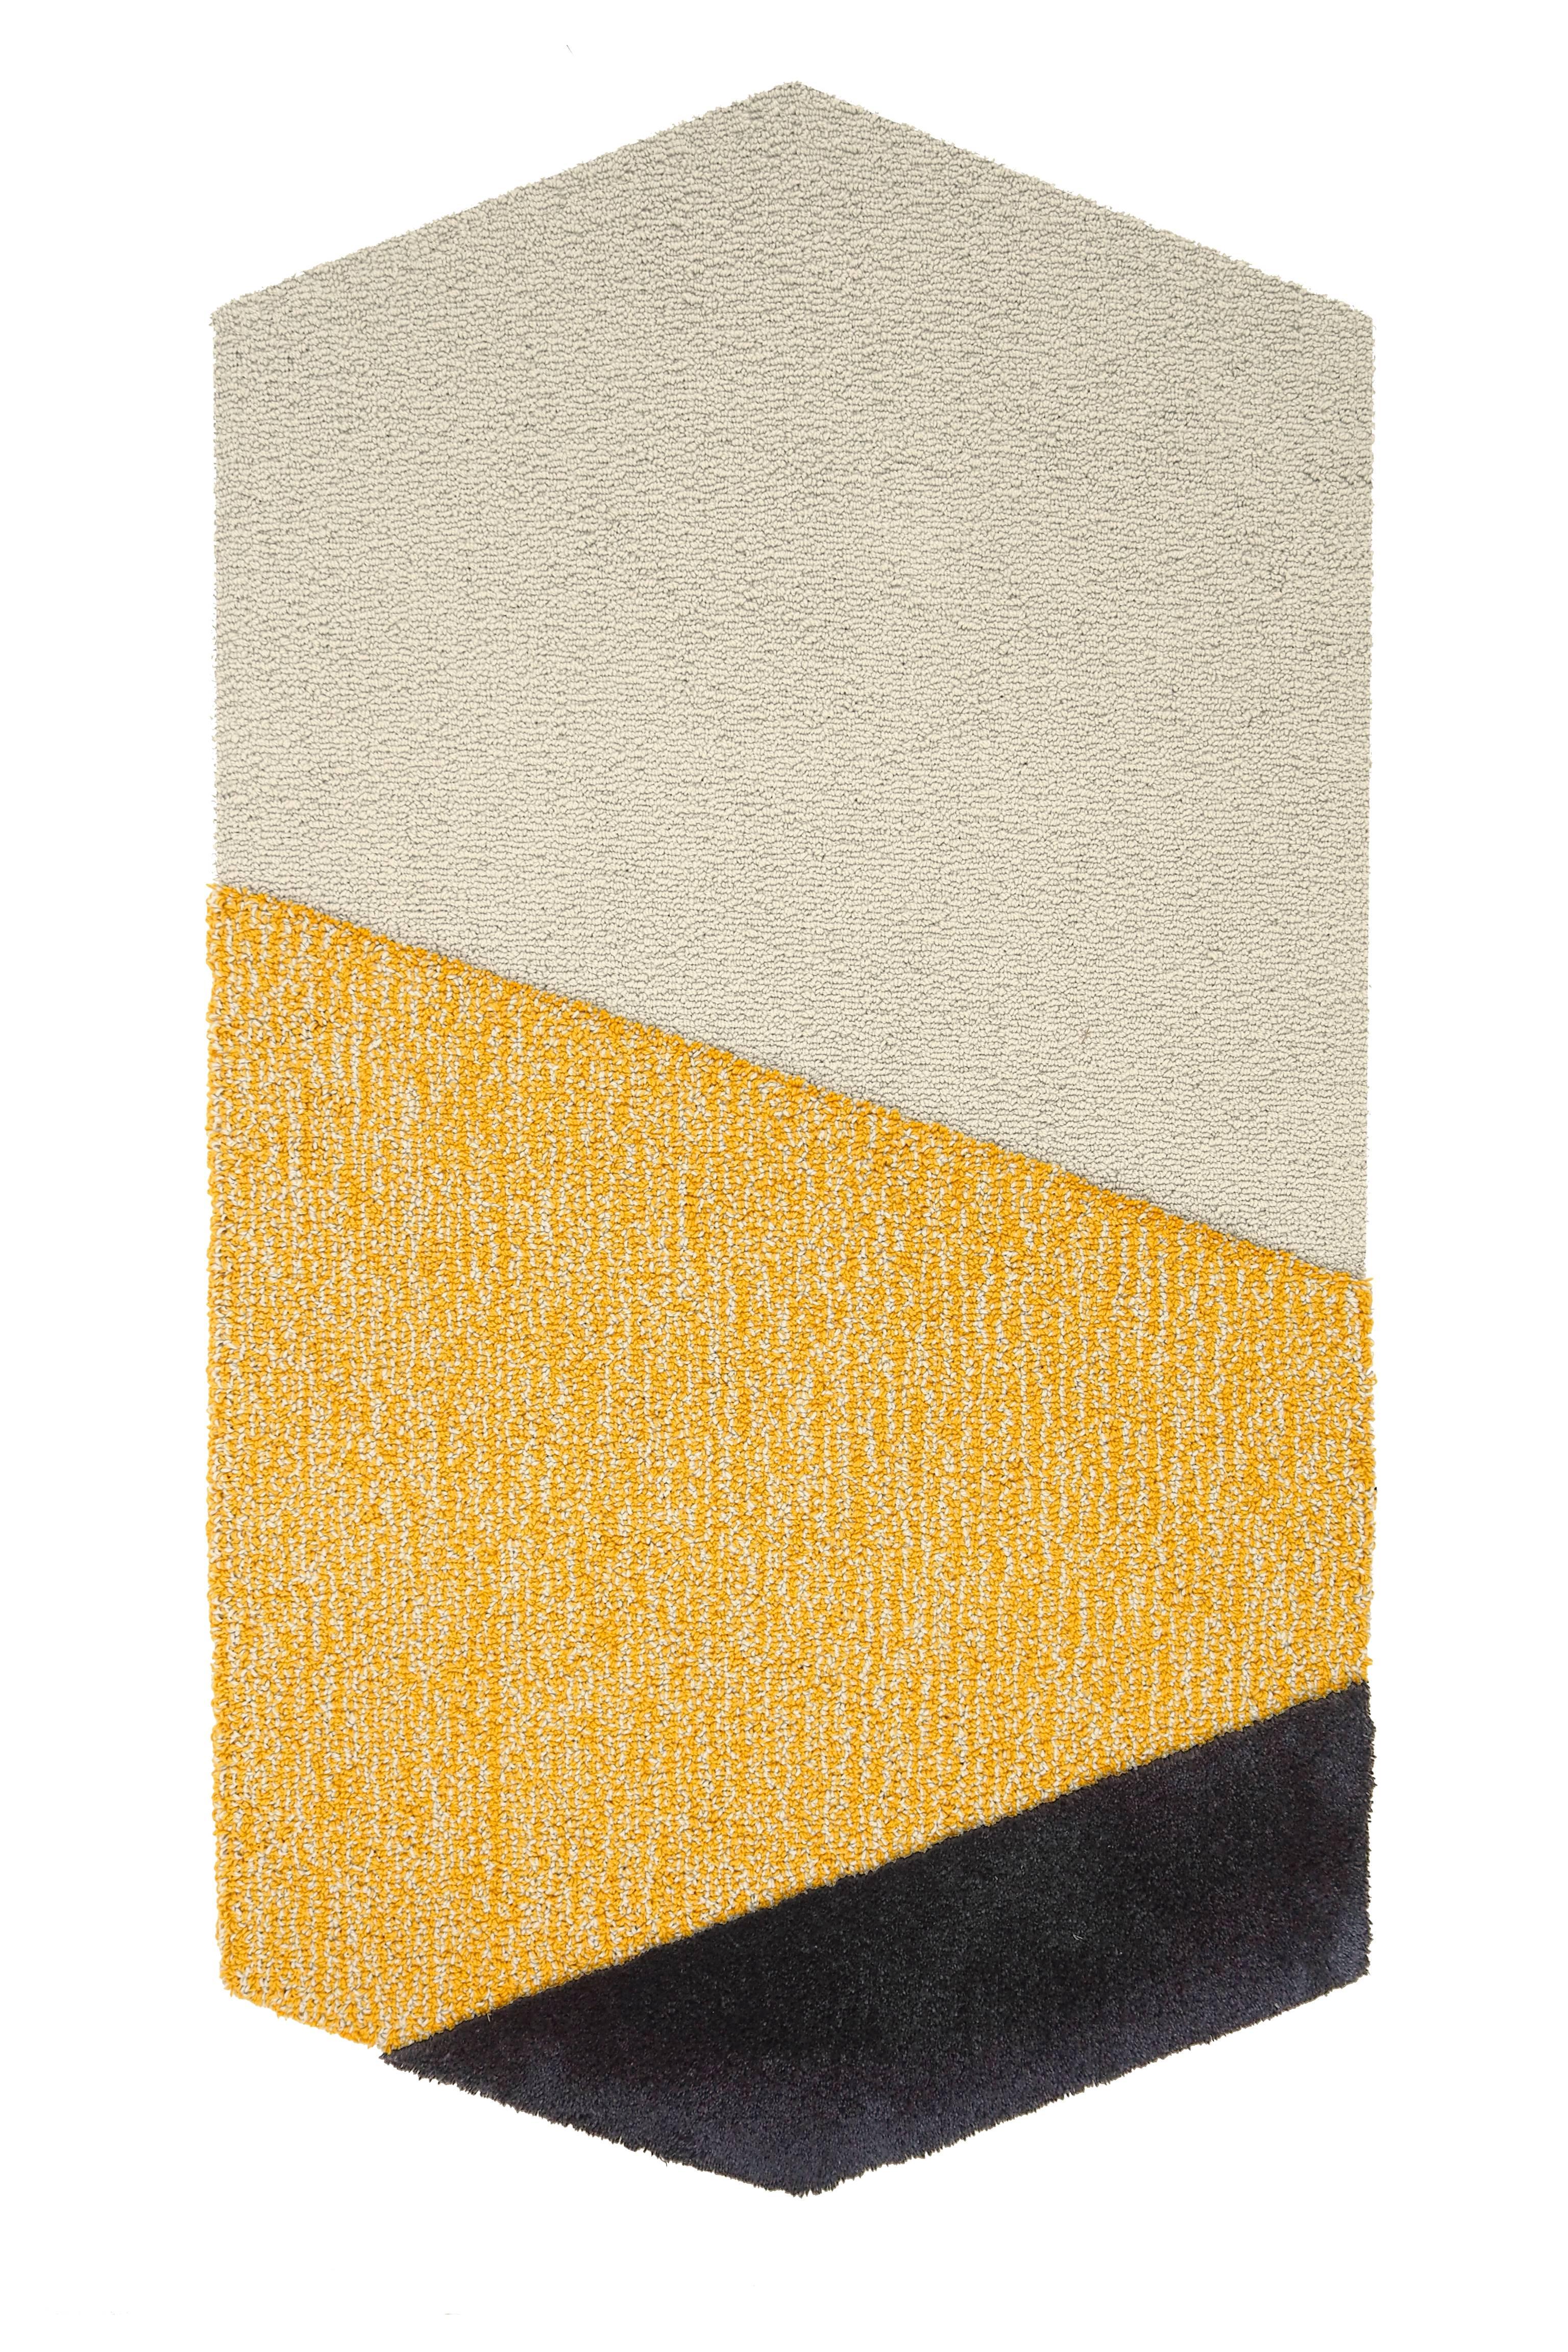 Hand-Crafted Small Yellow Gray Oci Rug Triptych by Seraina Lareida